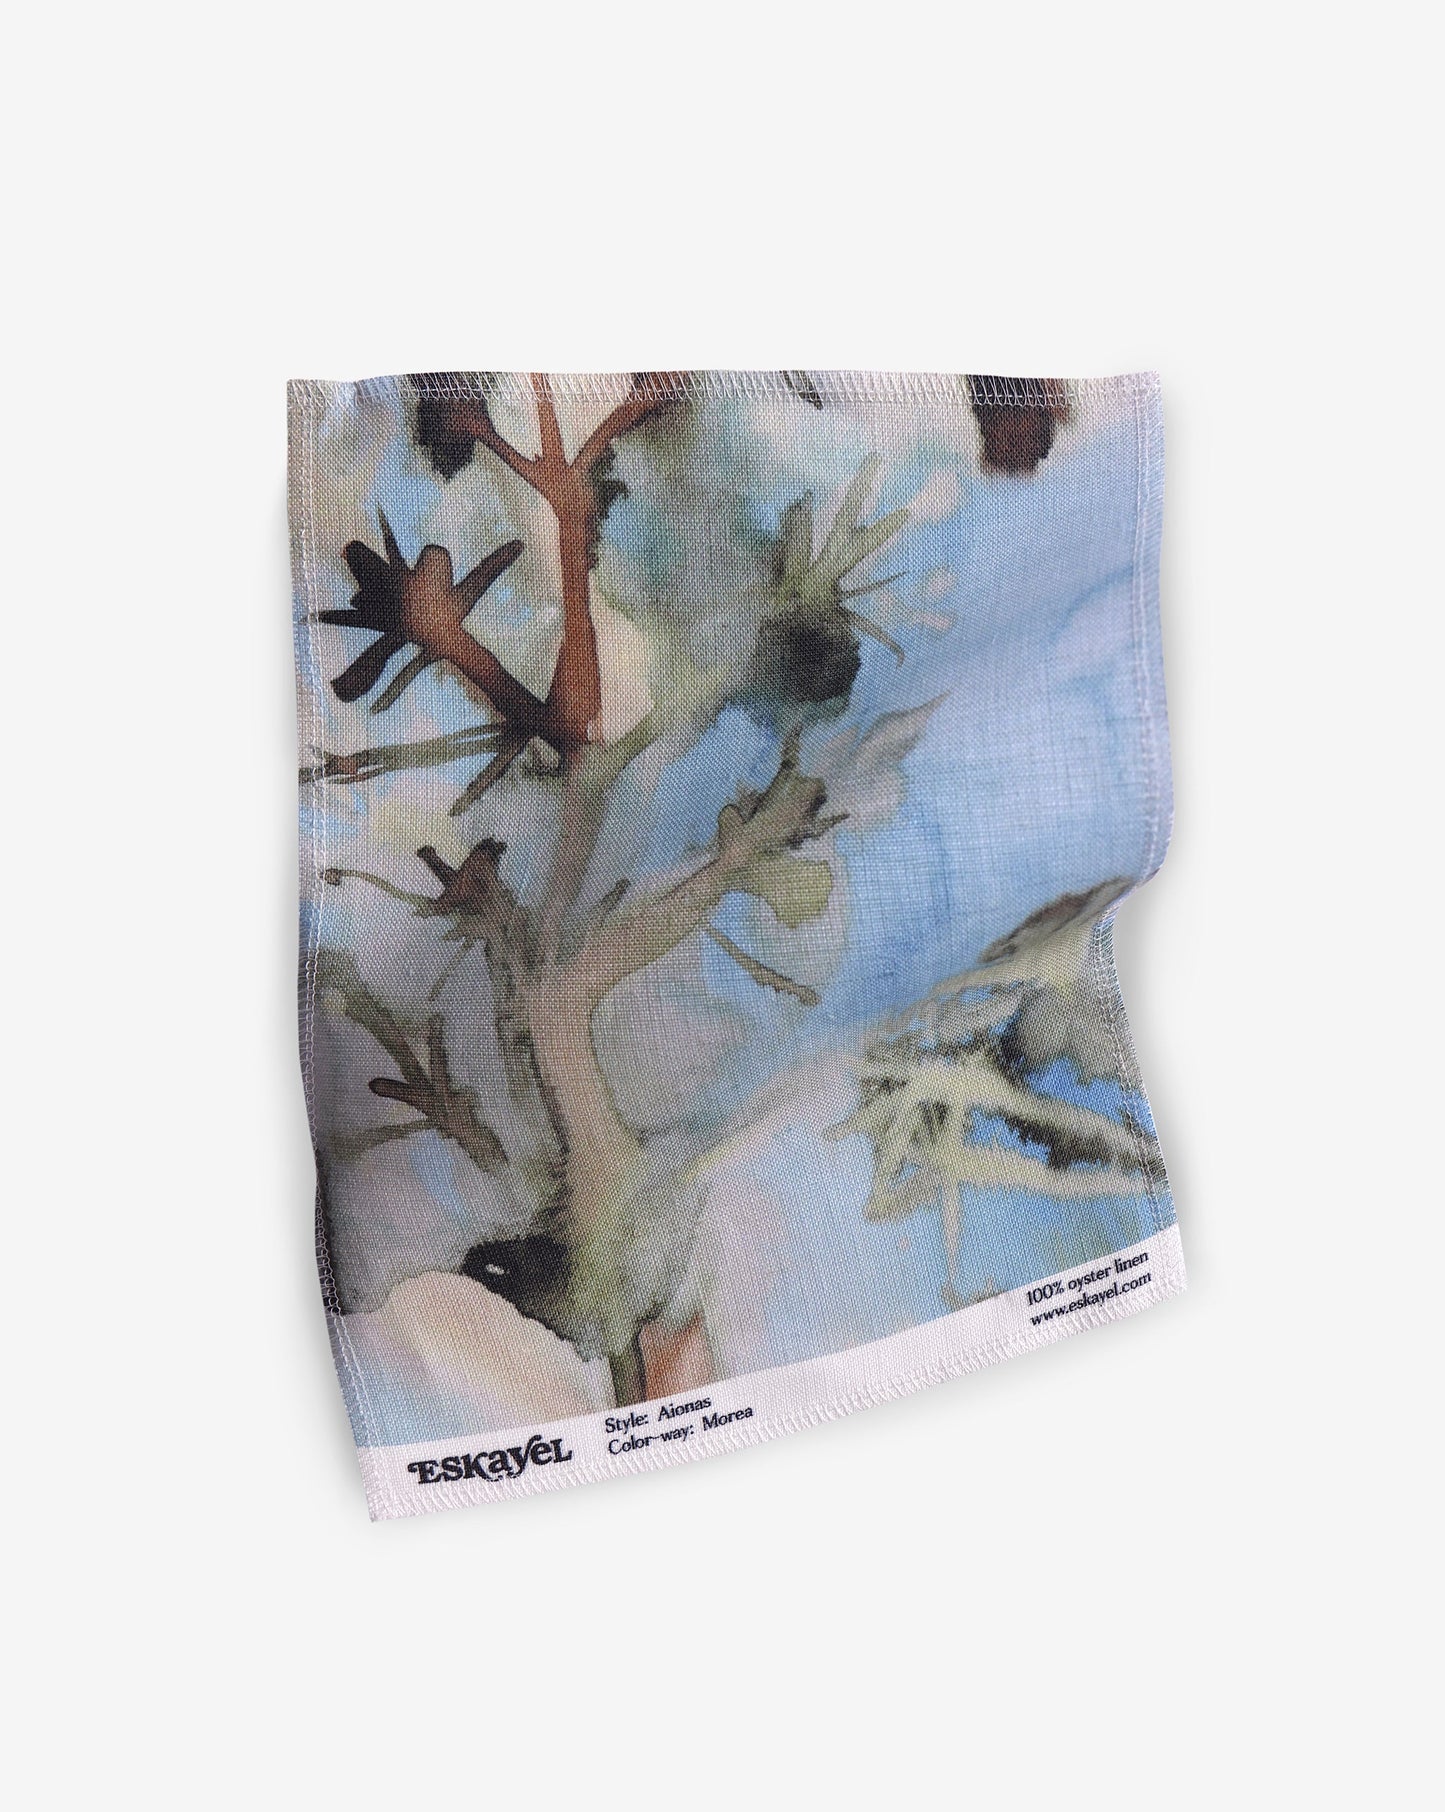 A Aionas Fabric Sample Morea fabric with an image of a tree